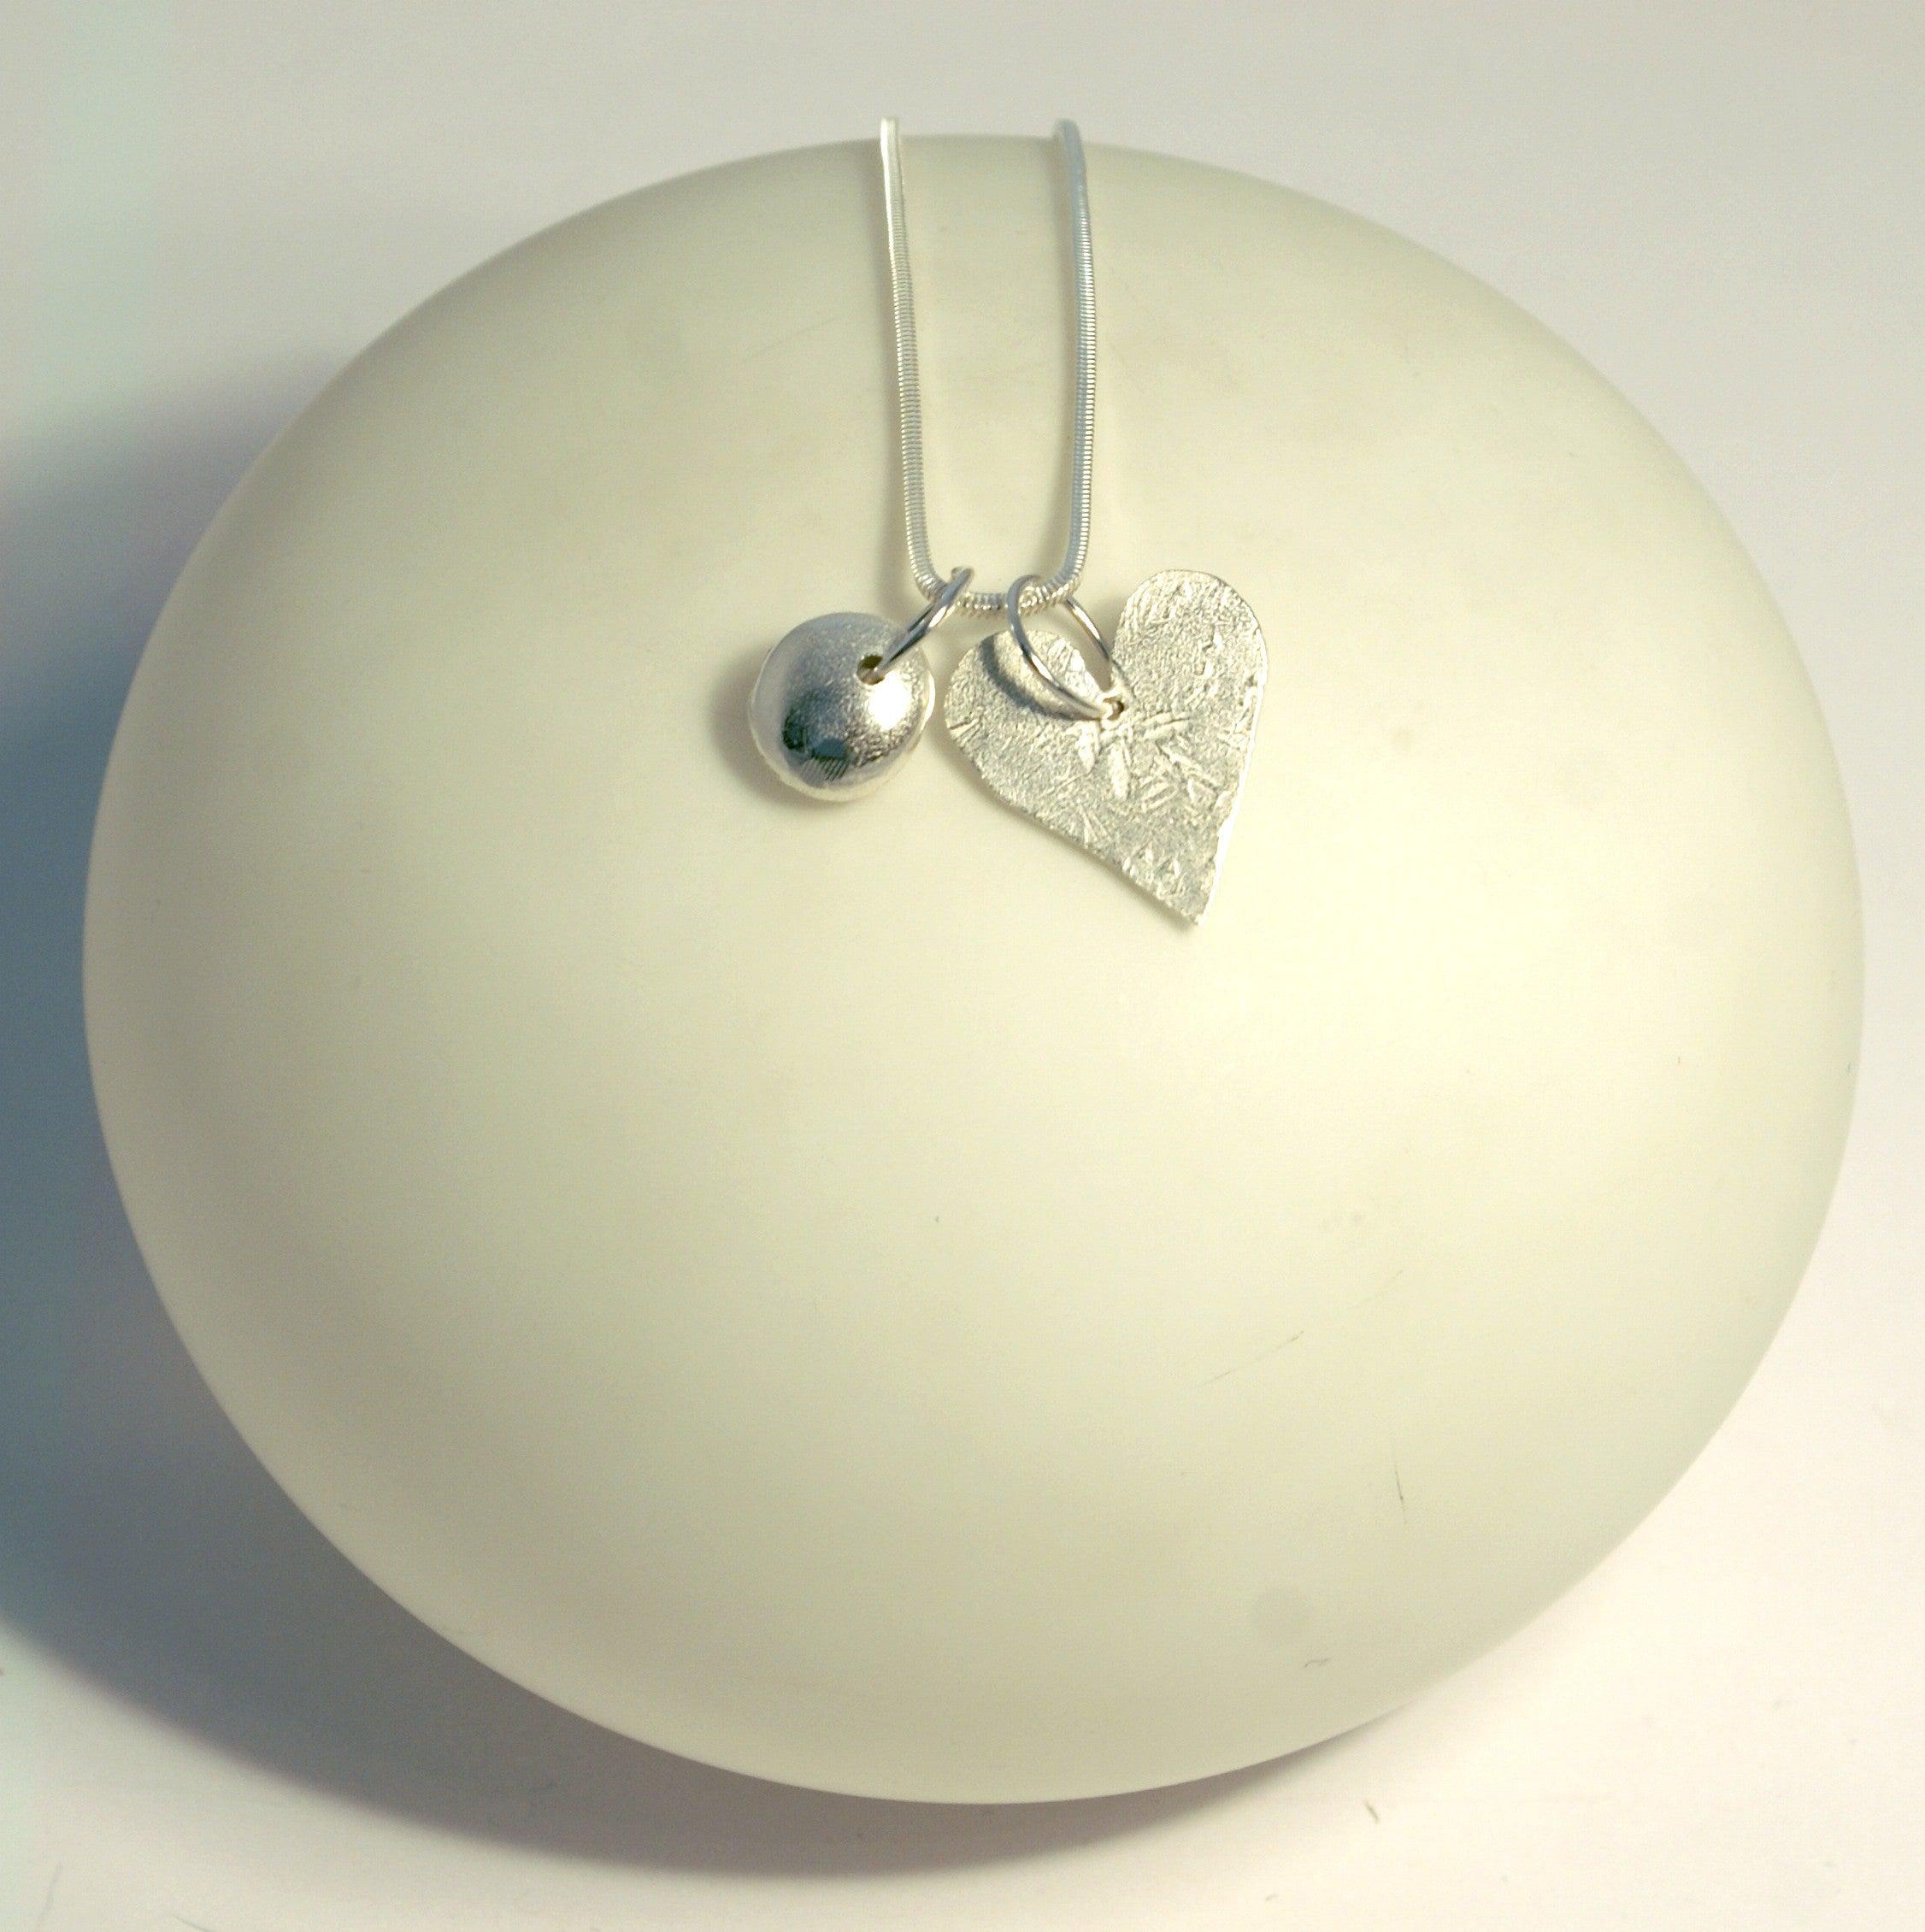 Nugget & Heart Pendant - The Nancy Smillie Shop - Art, Jewellery & Designer Gifts Glasgow